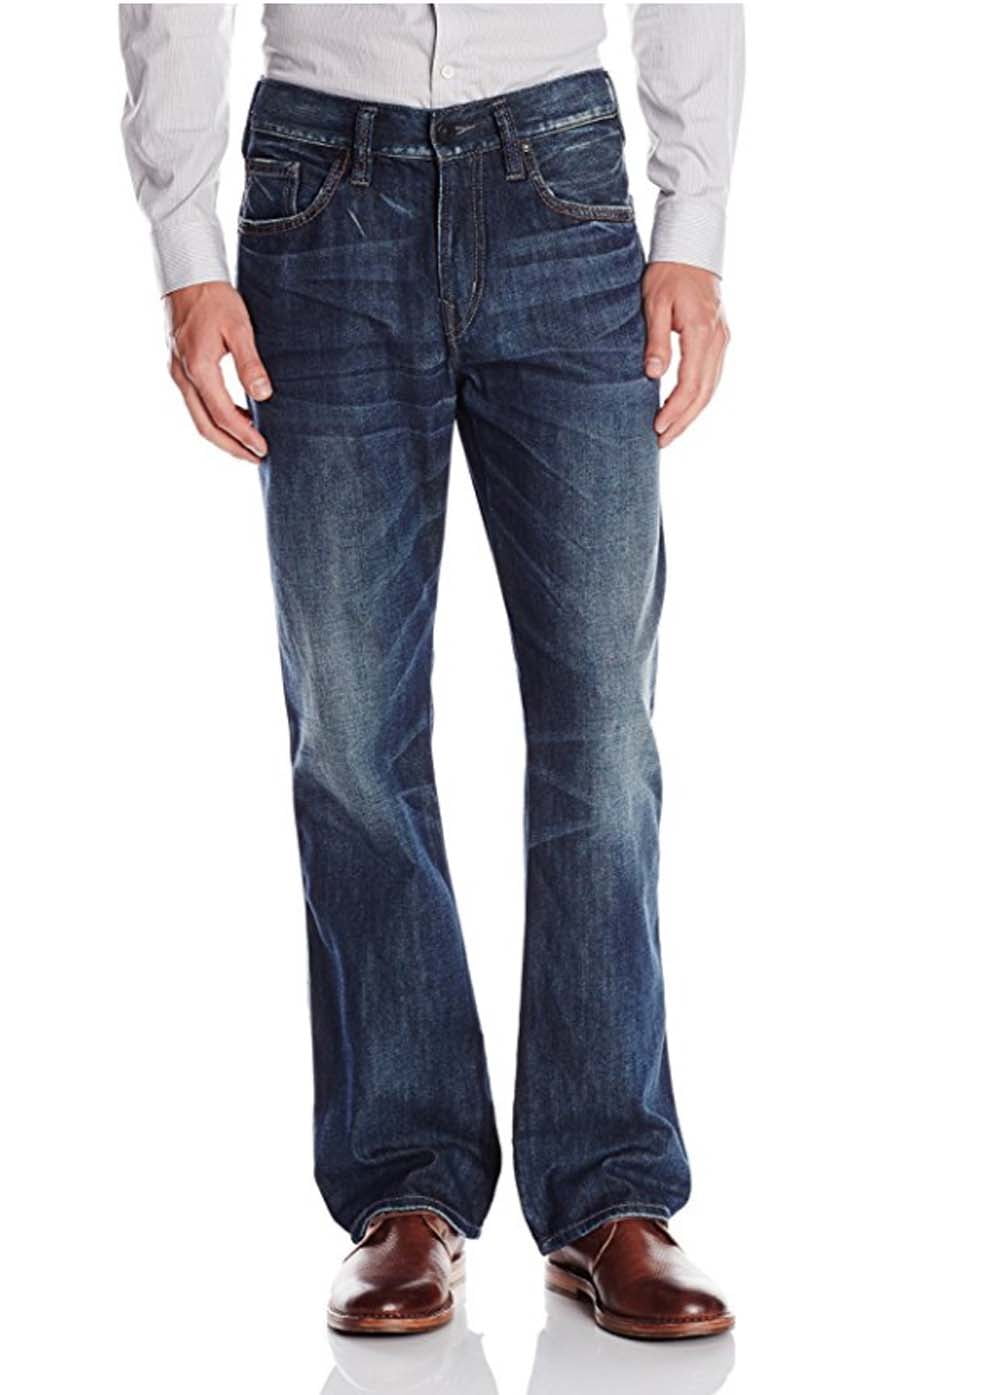 silver craig jeans